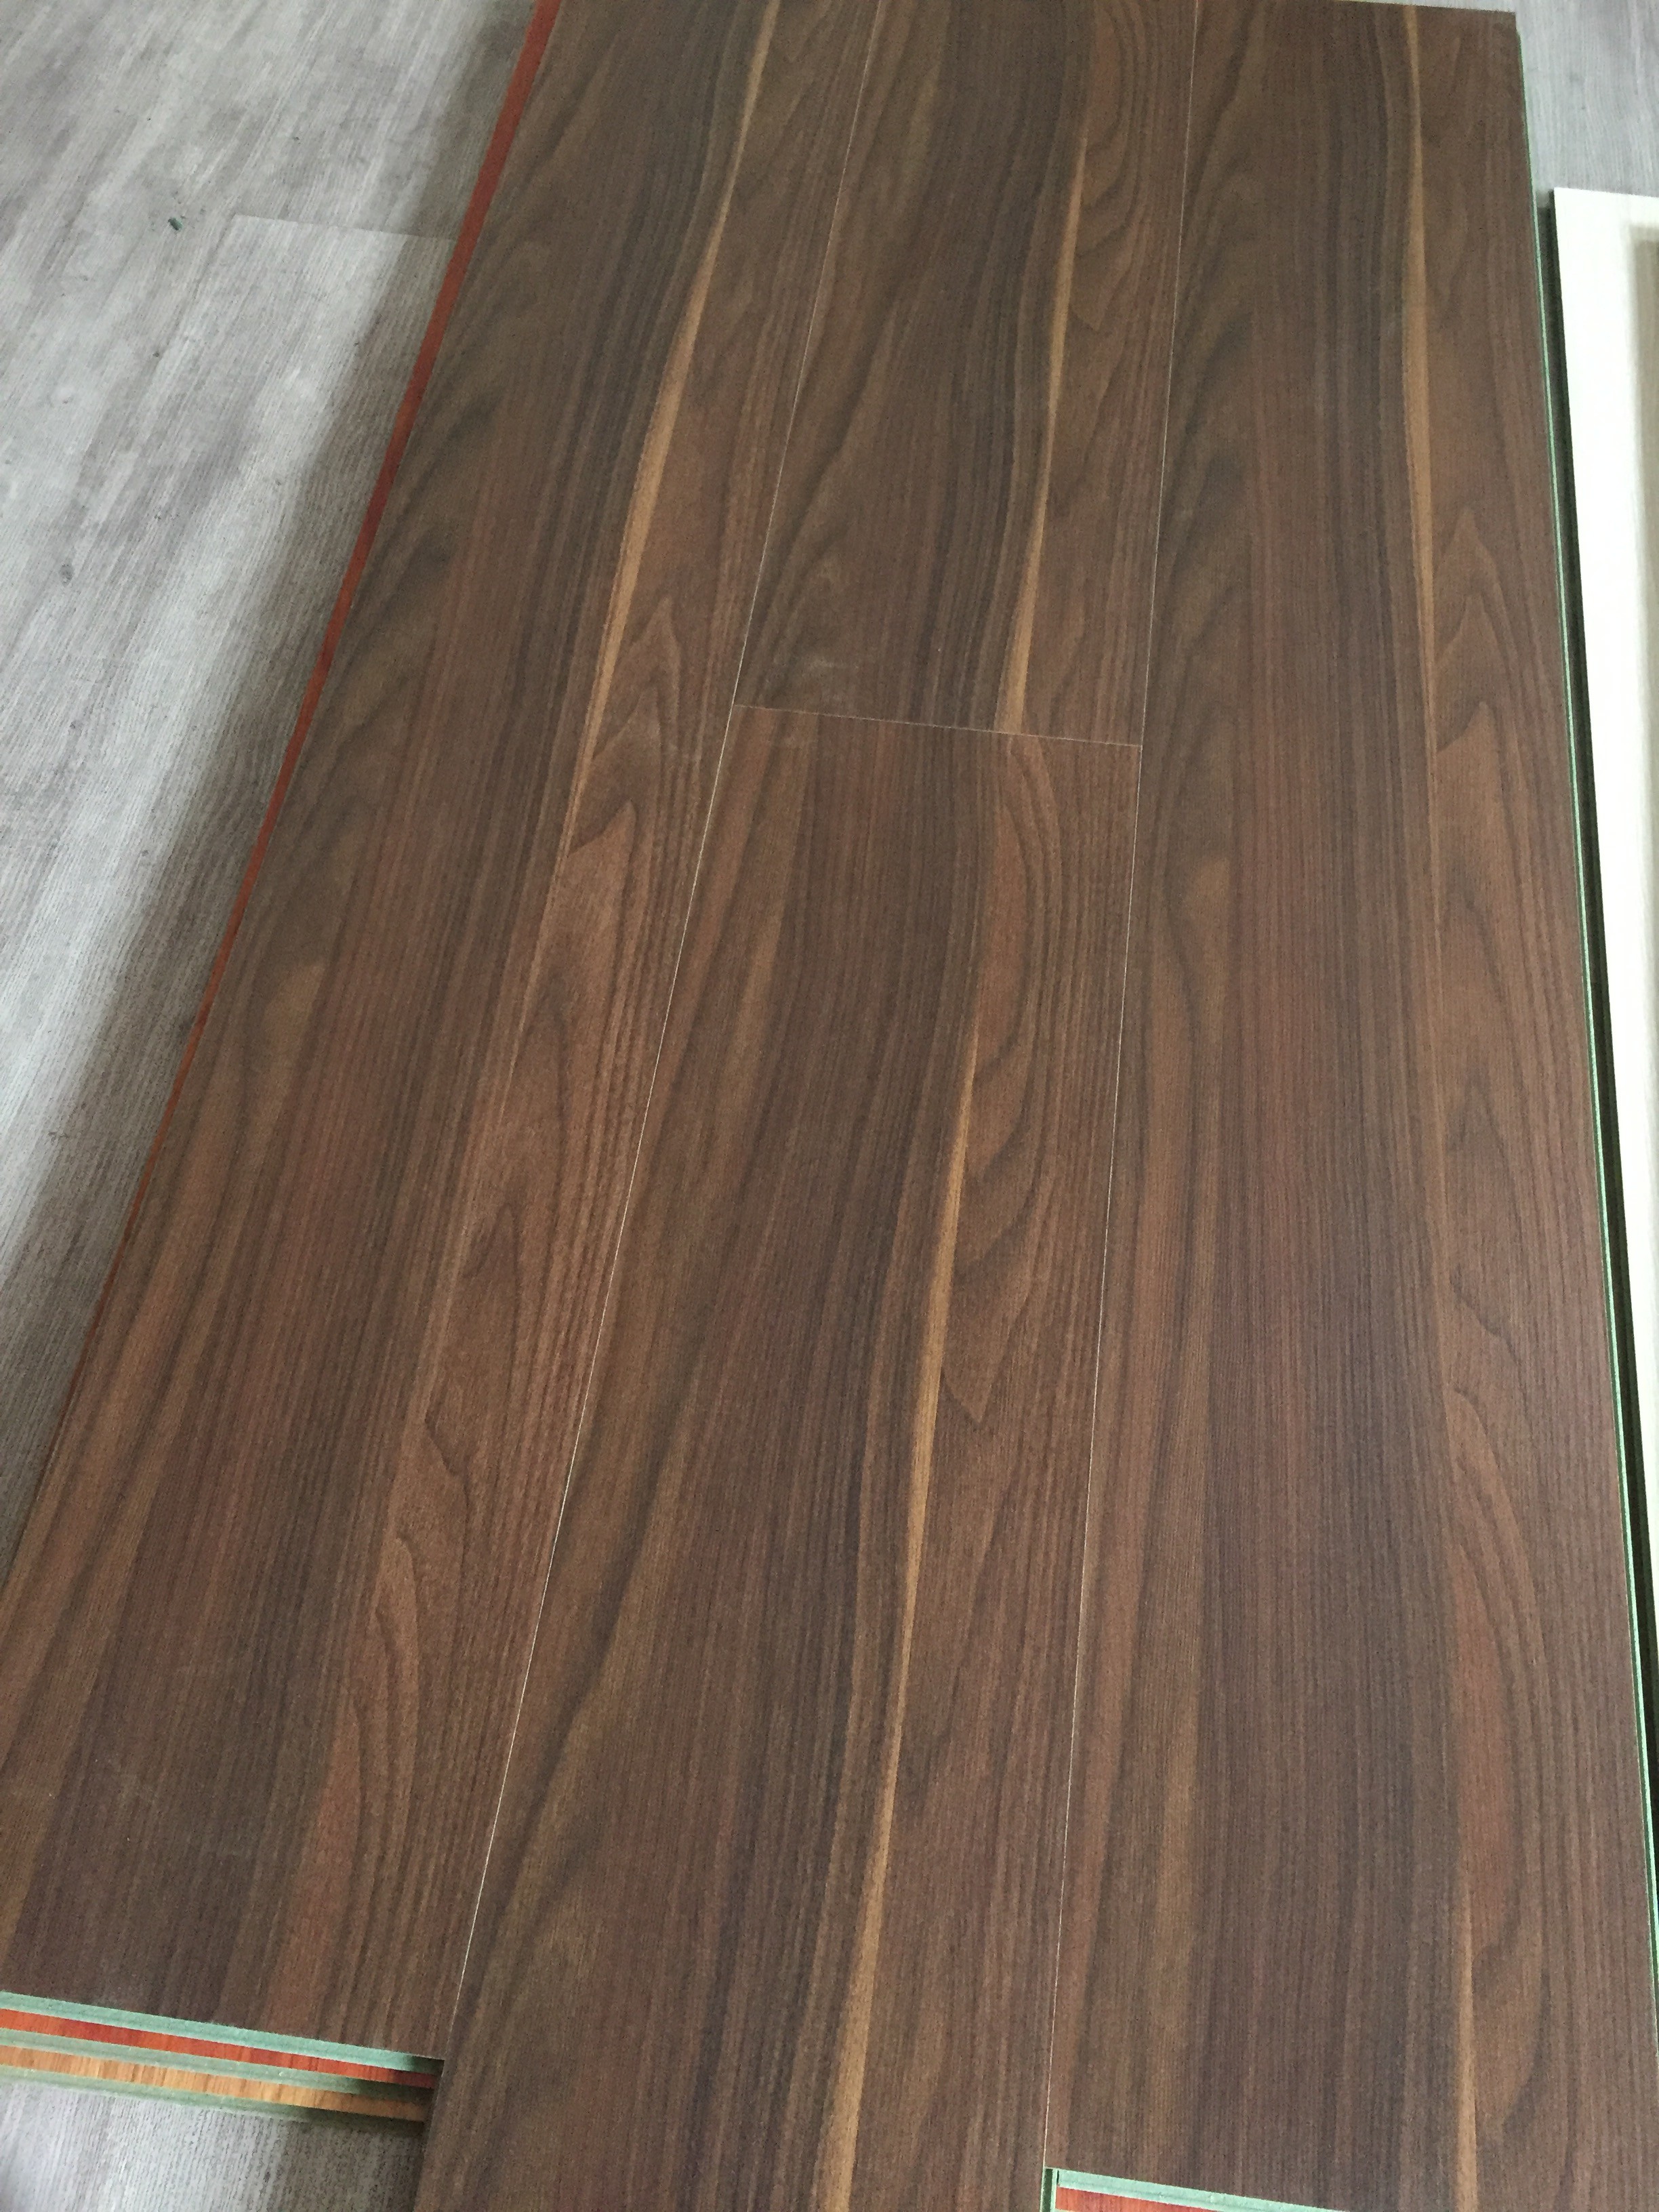 8.3mm,Ac3 HDF Laminated Wood Flooring.8mm oak wood grain laminate ...